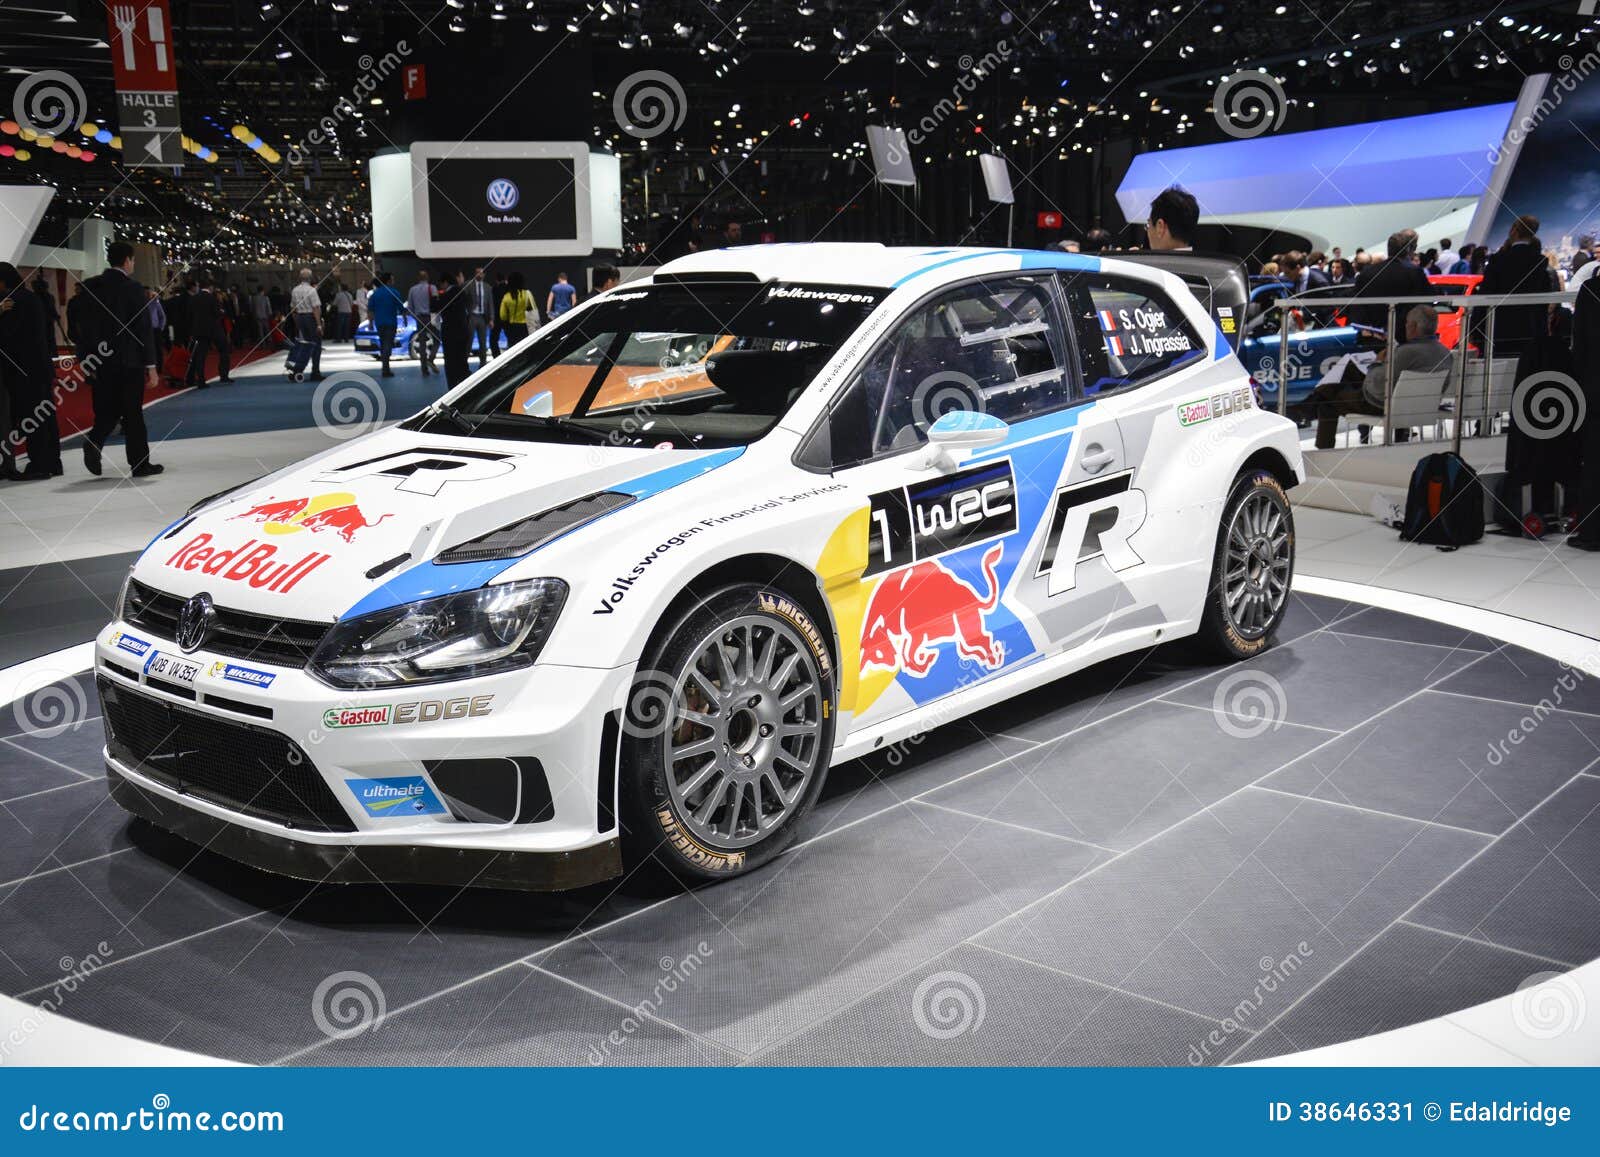 EAGLEMOSS Volkswagon Polo R WRC Winner Rallye Monte Carlo 2016 £ 7.99 publica Gratis! 